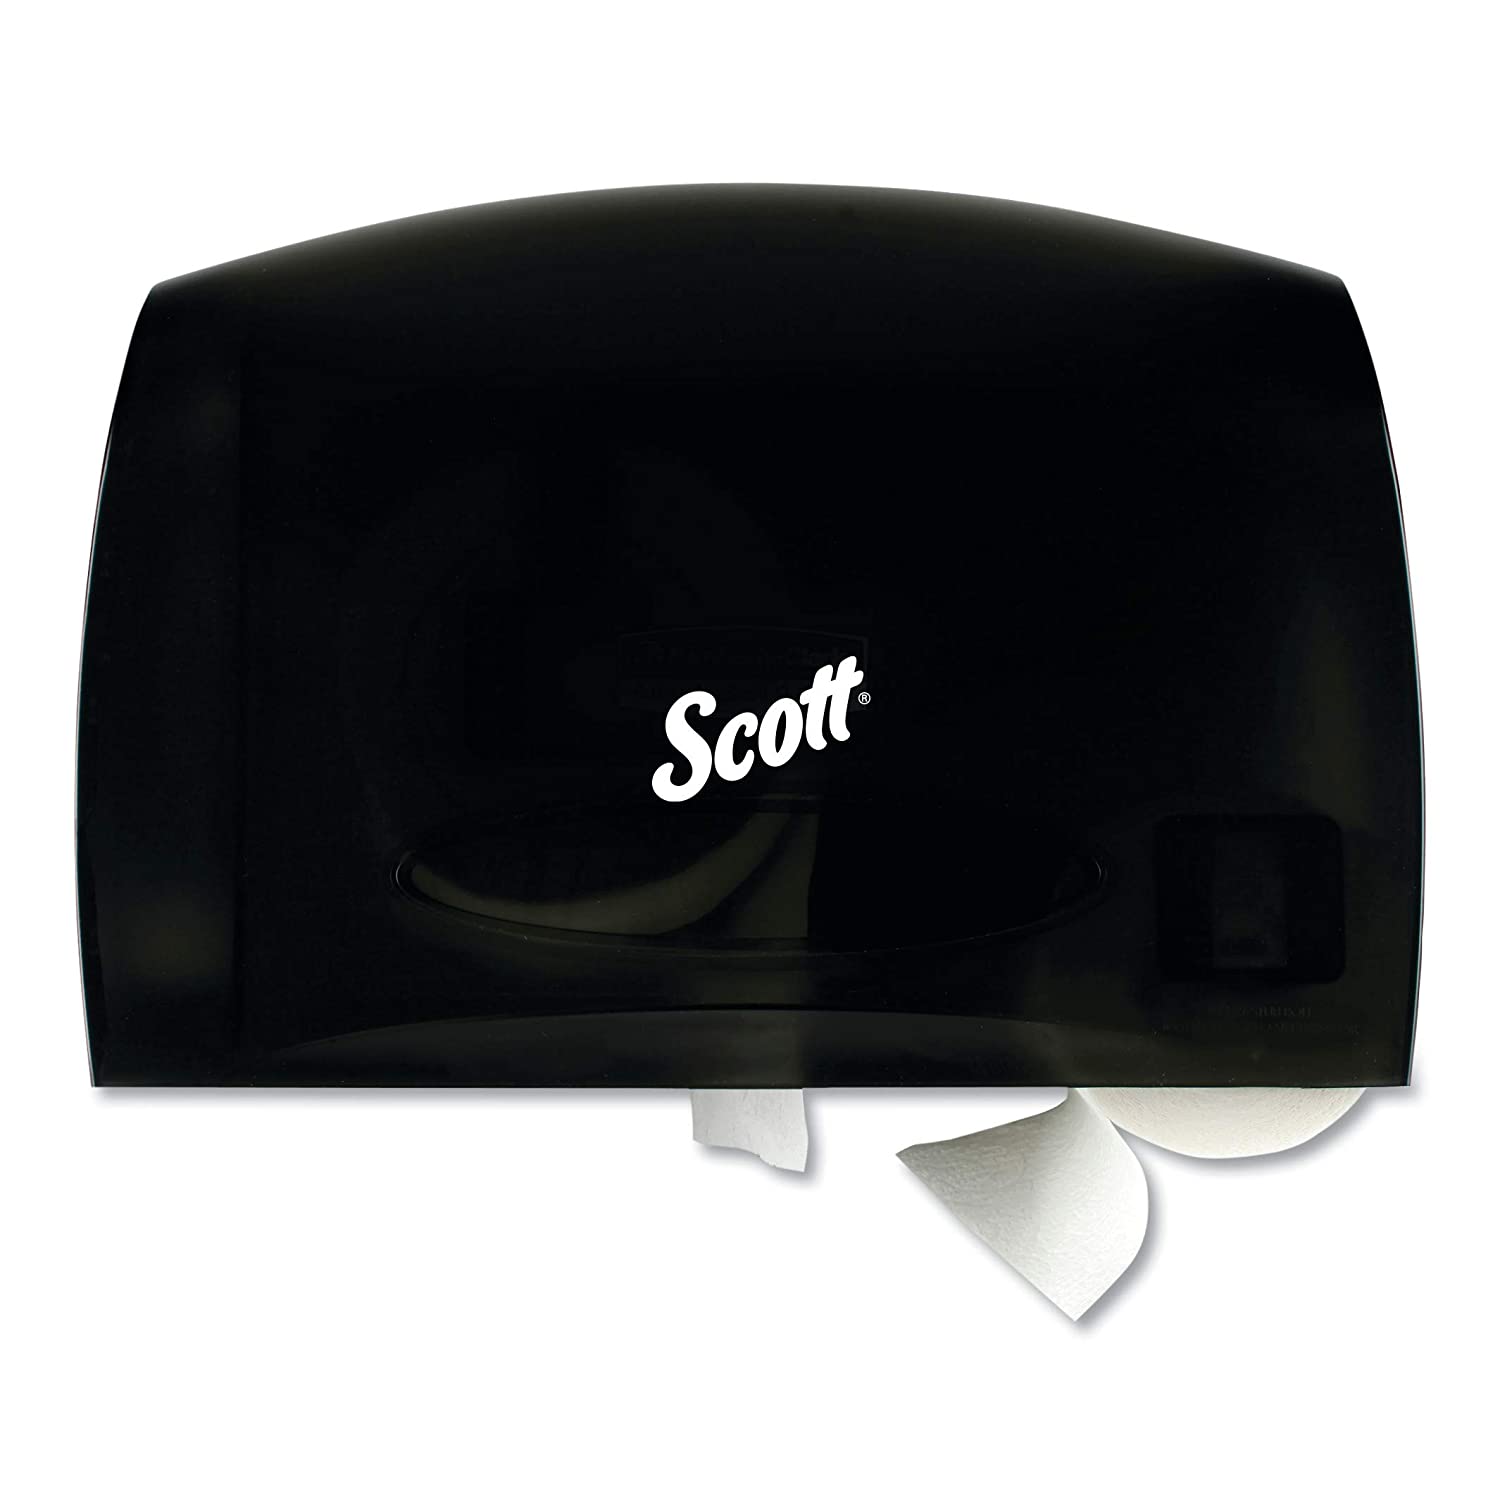 Scott® Essential™ Jumbo Coreless Roll Toilet Paper Dispenser - Black, 14.25” x 9.75” x 6”